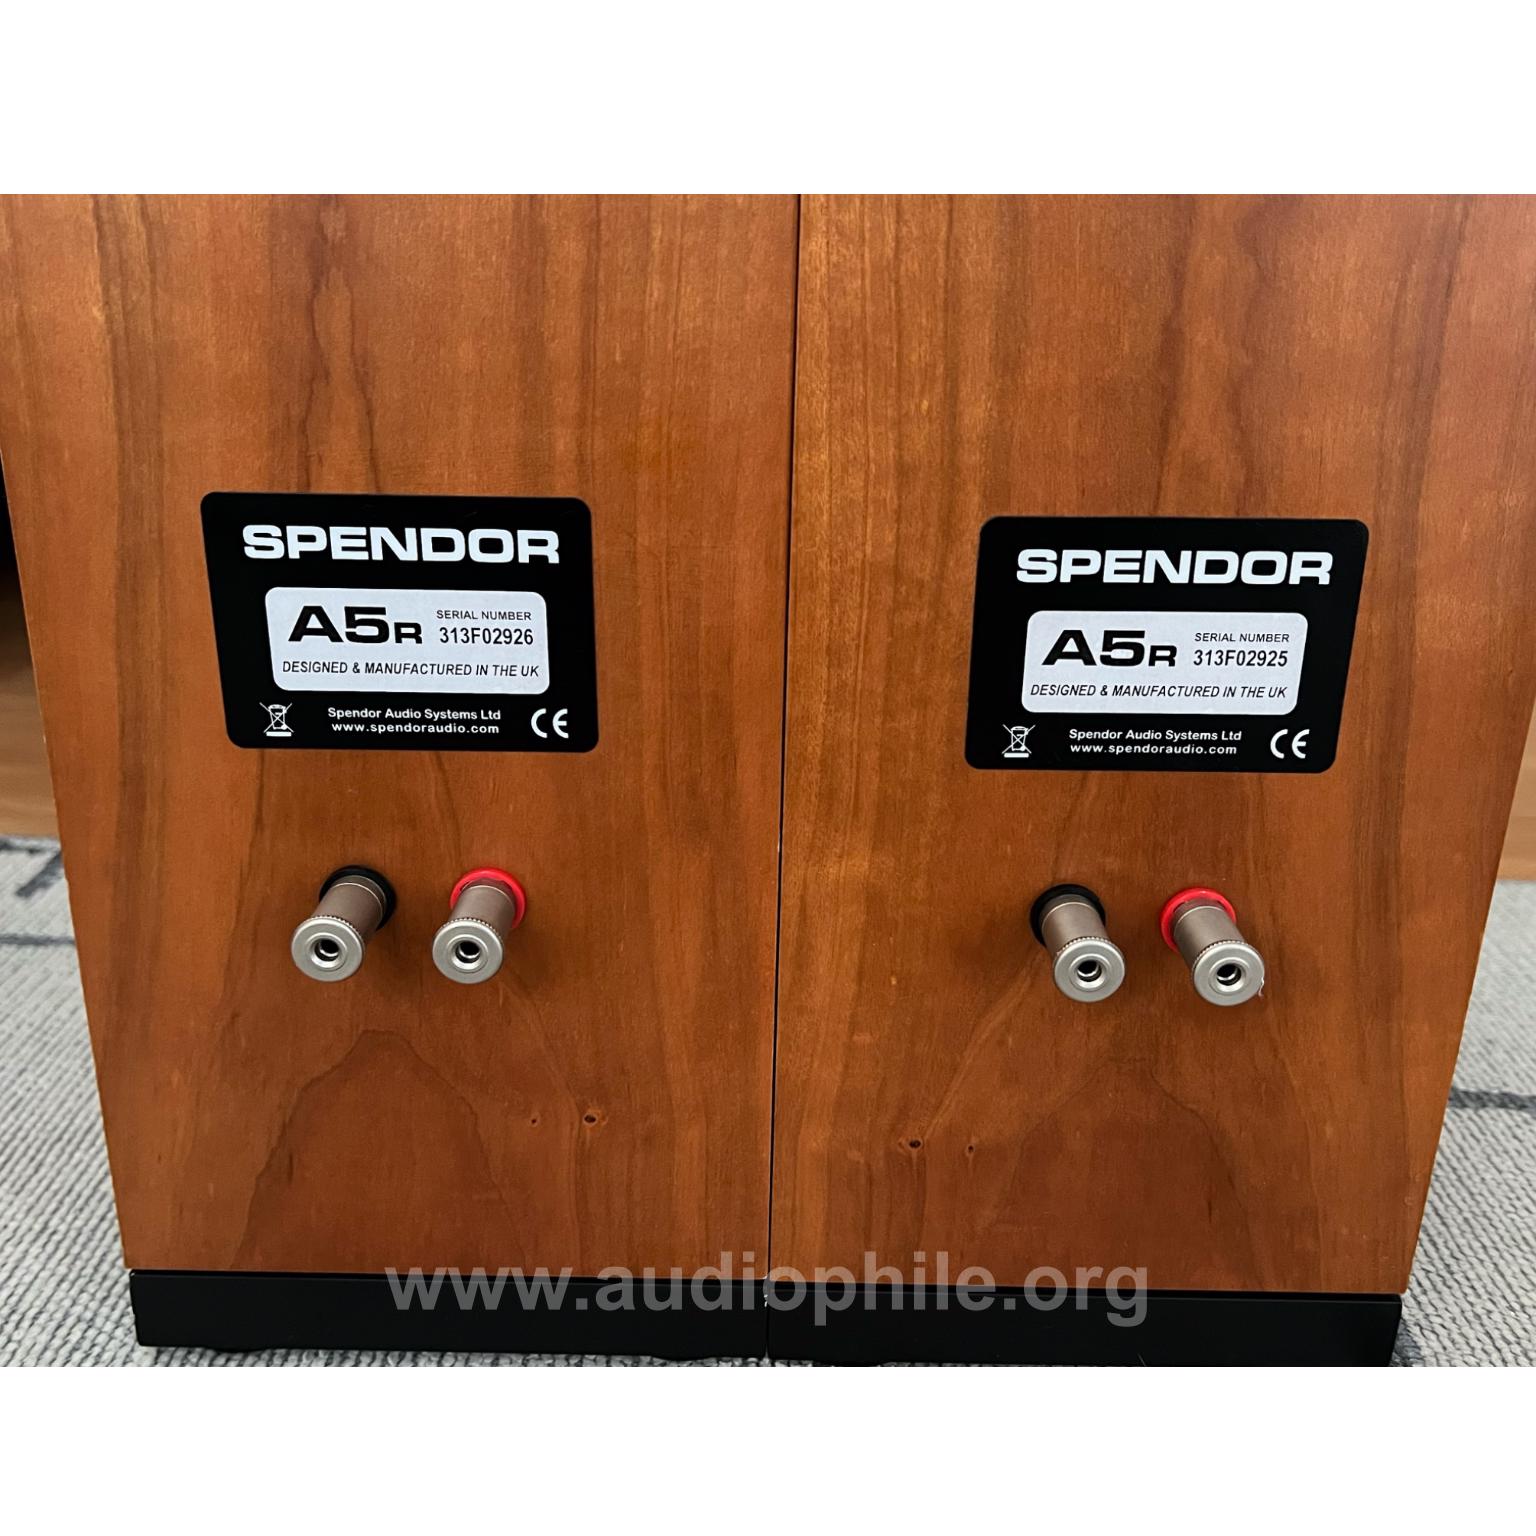 Spendor A5R Floorstanding loudspeakers in Cherr ilk sahibinden